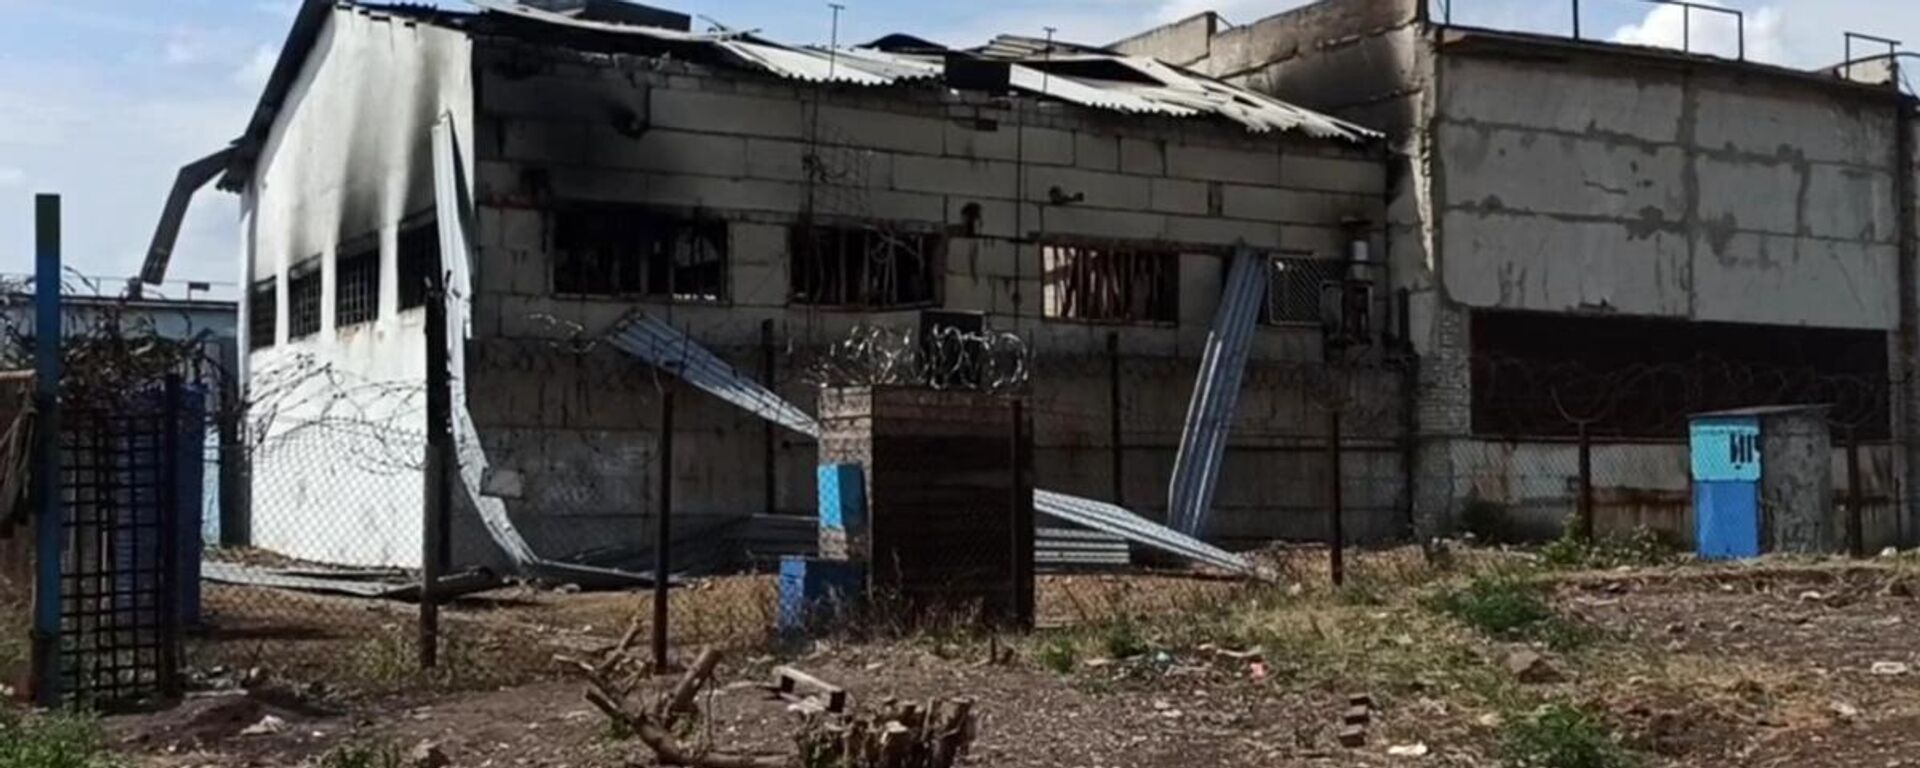 Detention facility in Elenovka, DPR, in the aftermath of Ukrainian airstrike, July 29 2022 - Sputnik International, 1920, 30.07.2022